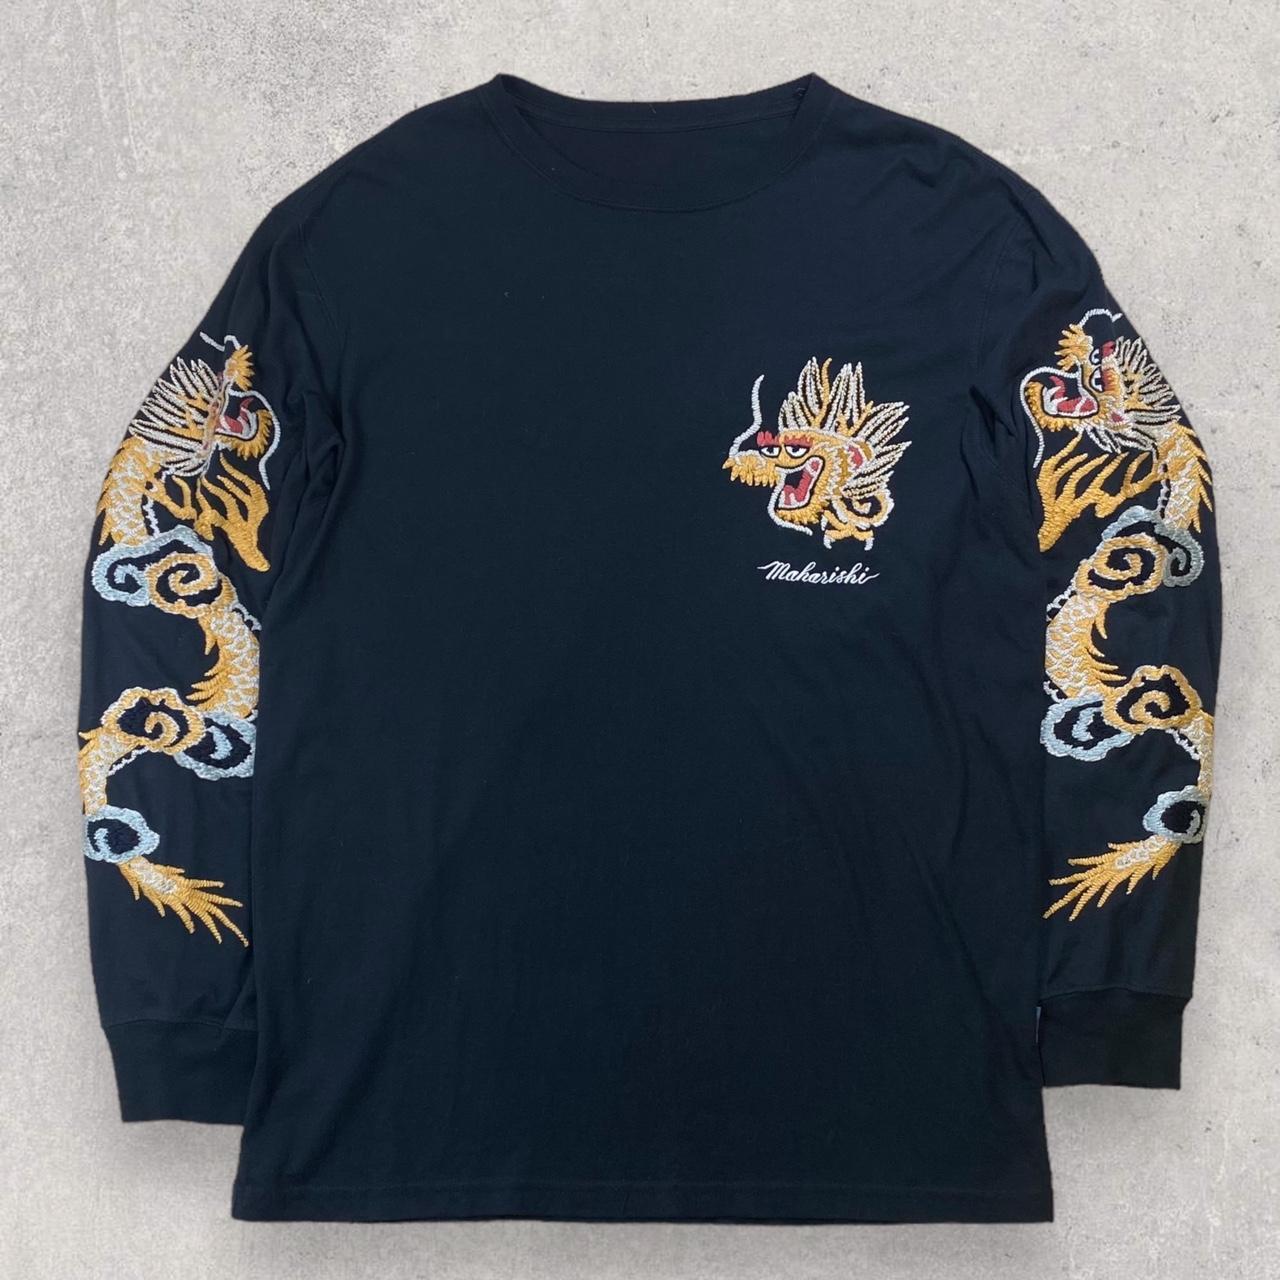 Maharishi Black Dragon Embroidered Long Sleeve T... - Depop